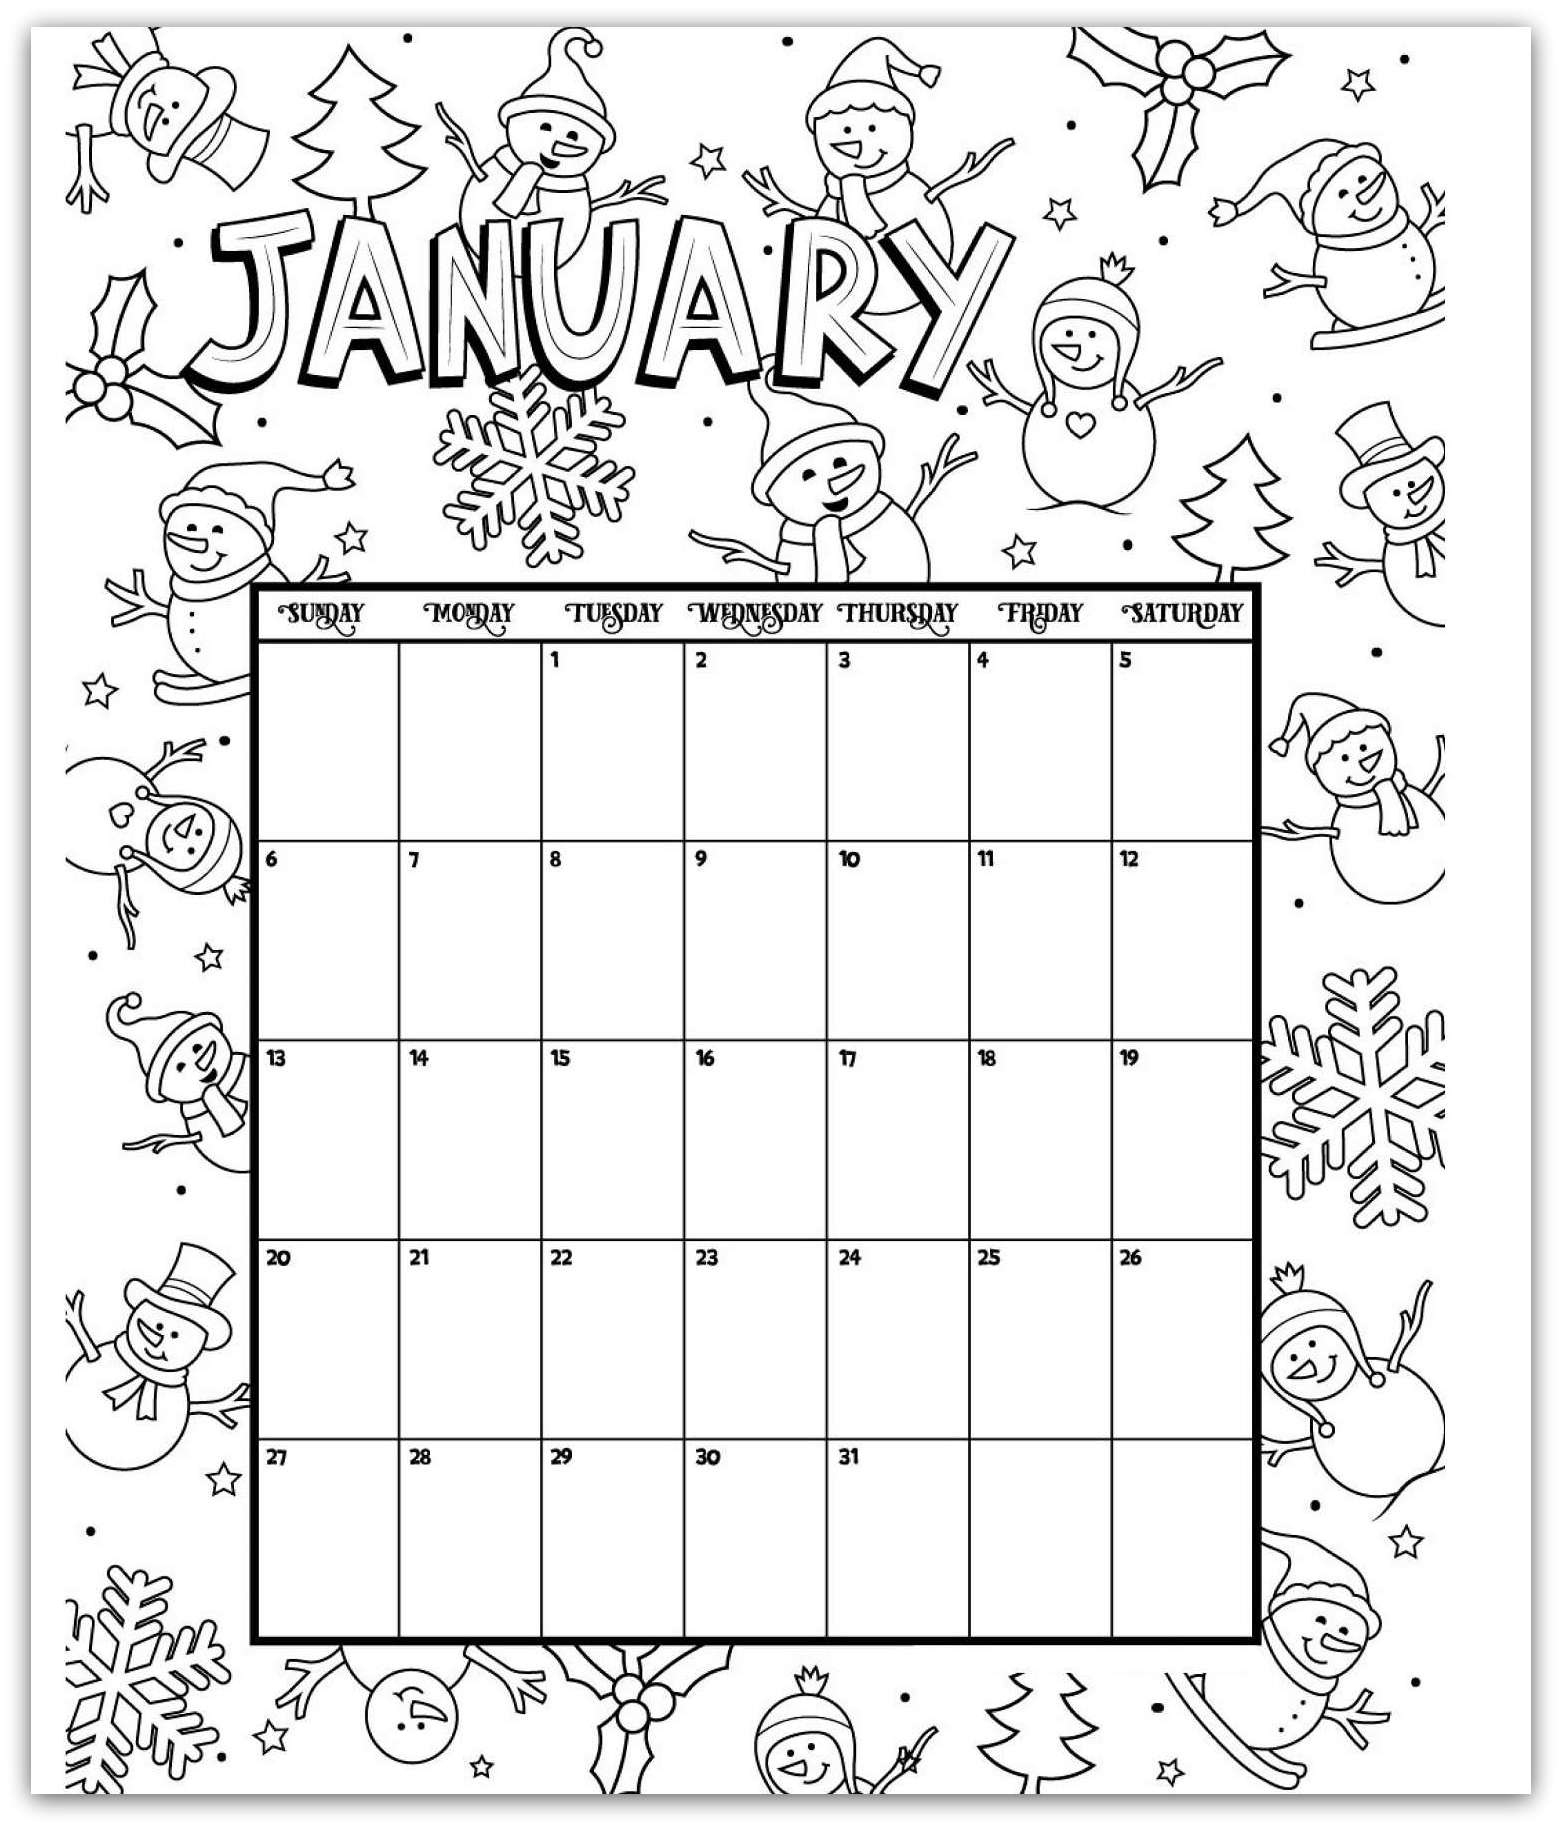 Kindergarten Calendars | Calendarbuzz December Calendar Template Kindergarten